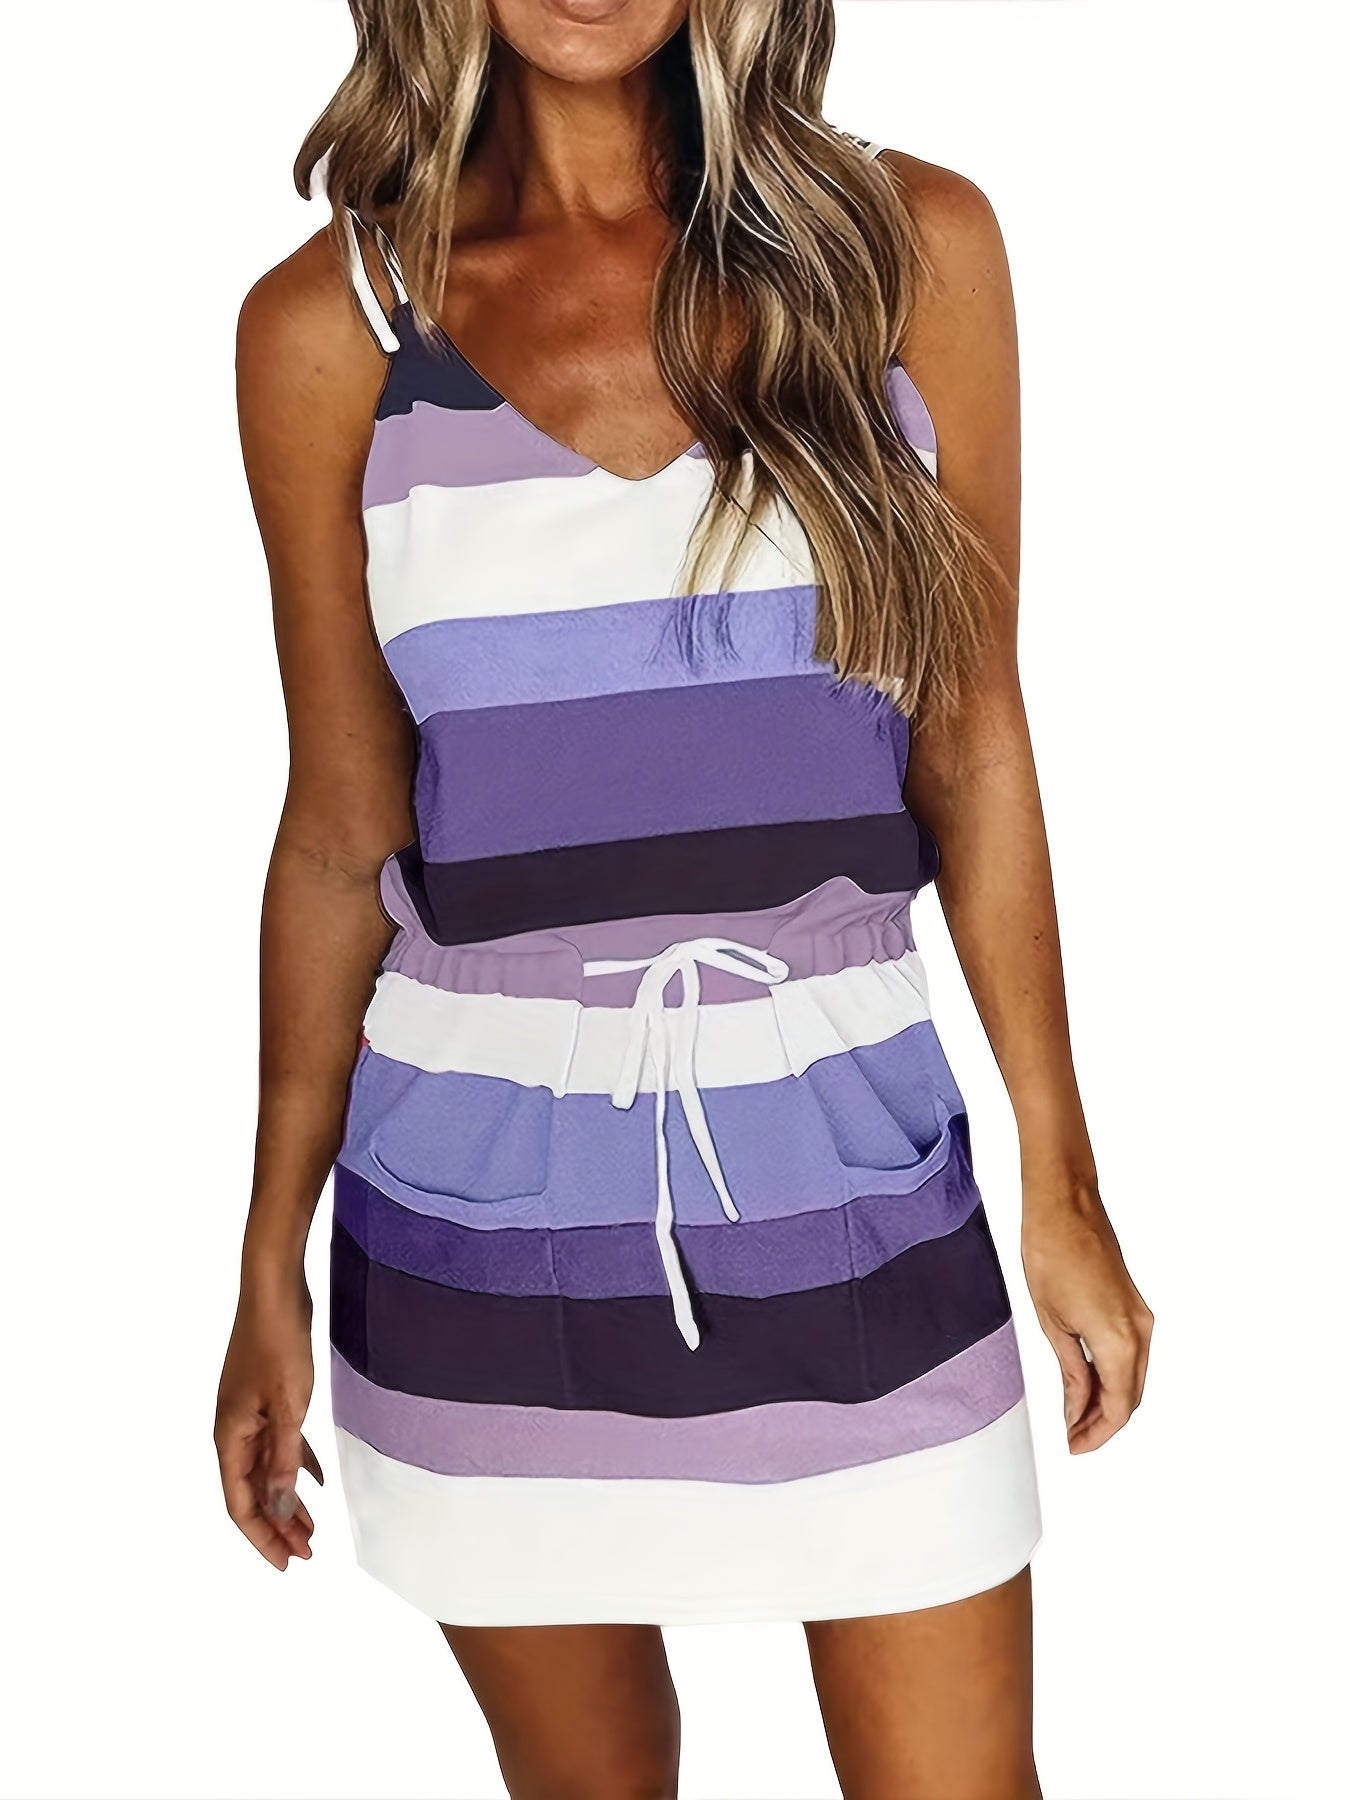 「lovevop」Striped Drawstring Lace Up Dress, Pocket V-neck Sleeveless Dress, Women's Clothing